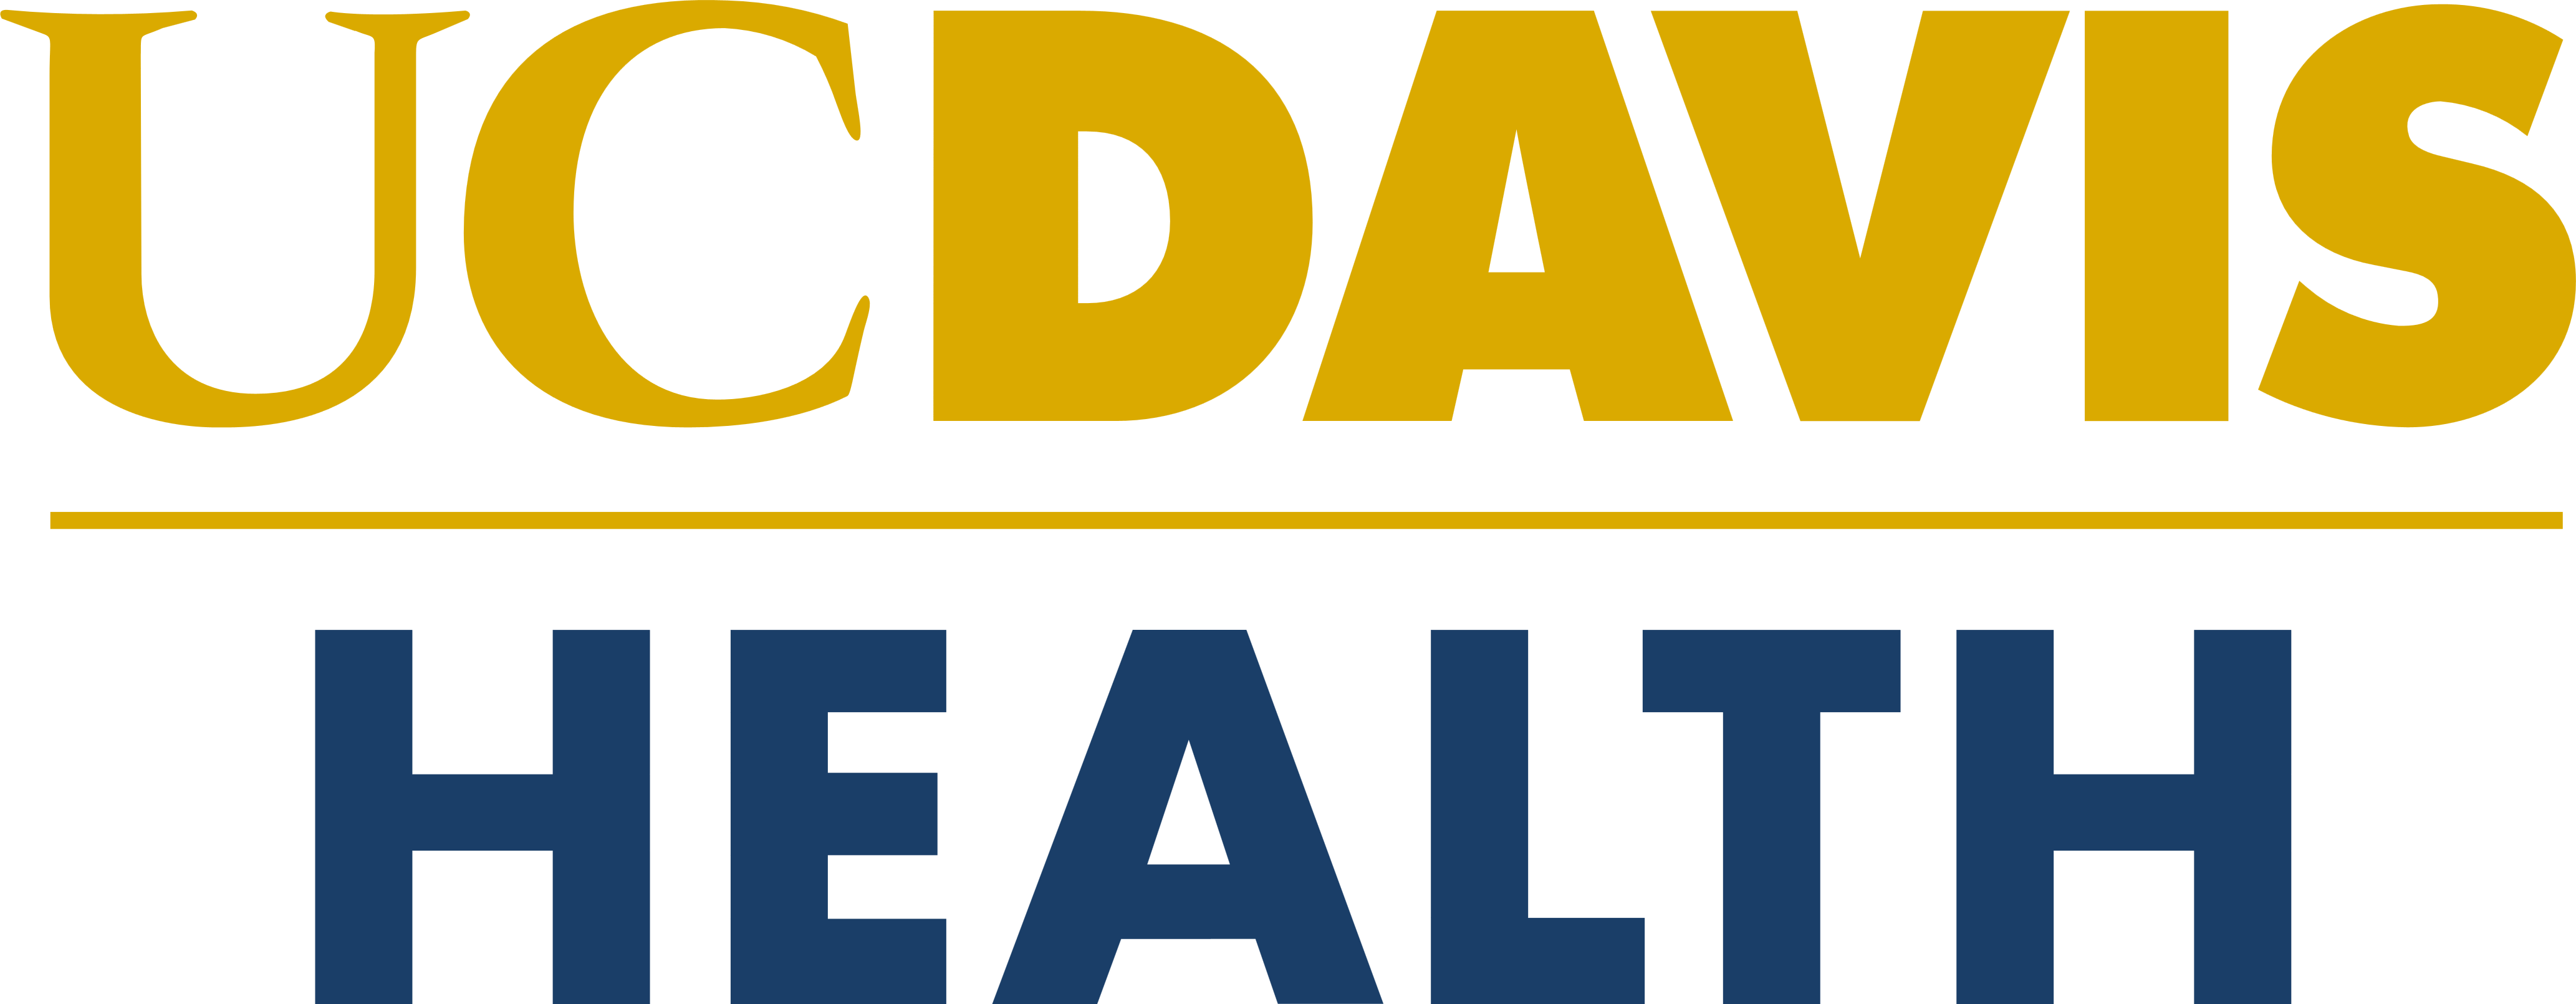 UC Davis Health full color client logo